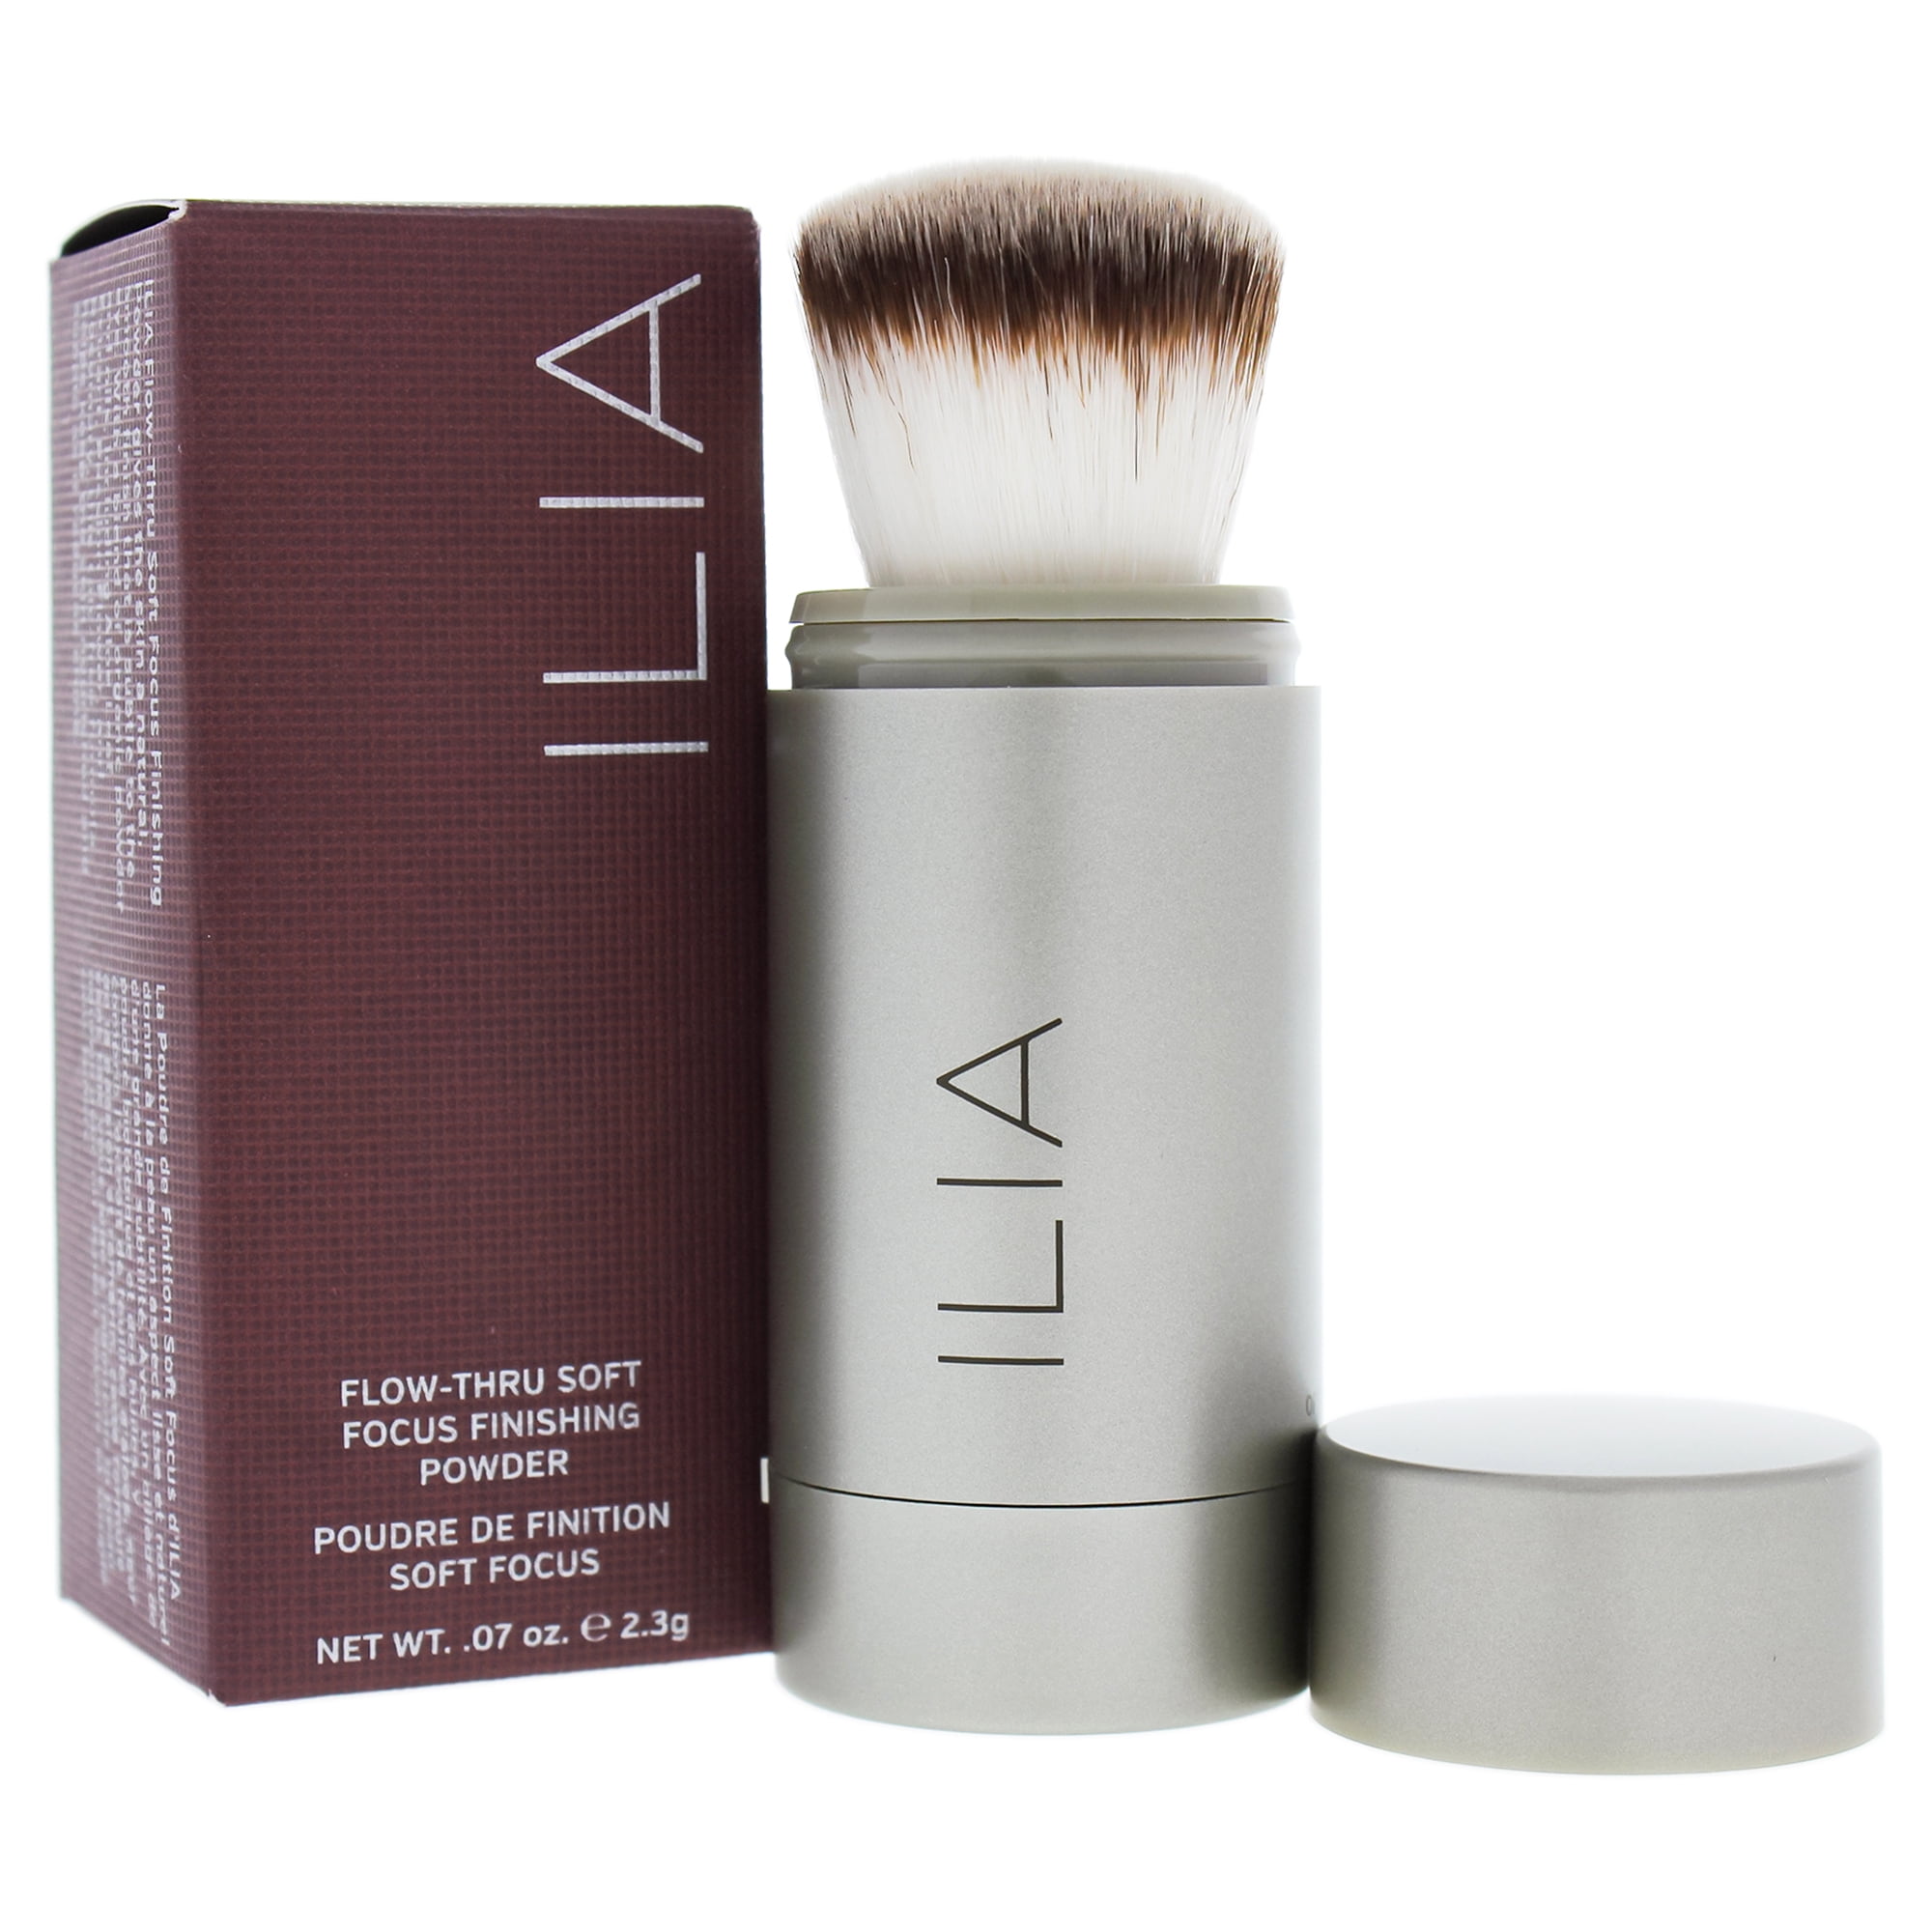 Refill-Me™ Refillable Loose Powder Brush - The Make-up & Skin Care Studio